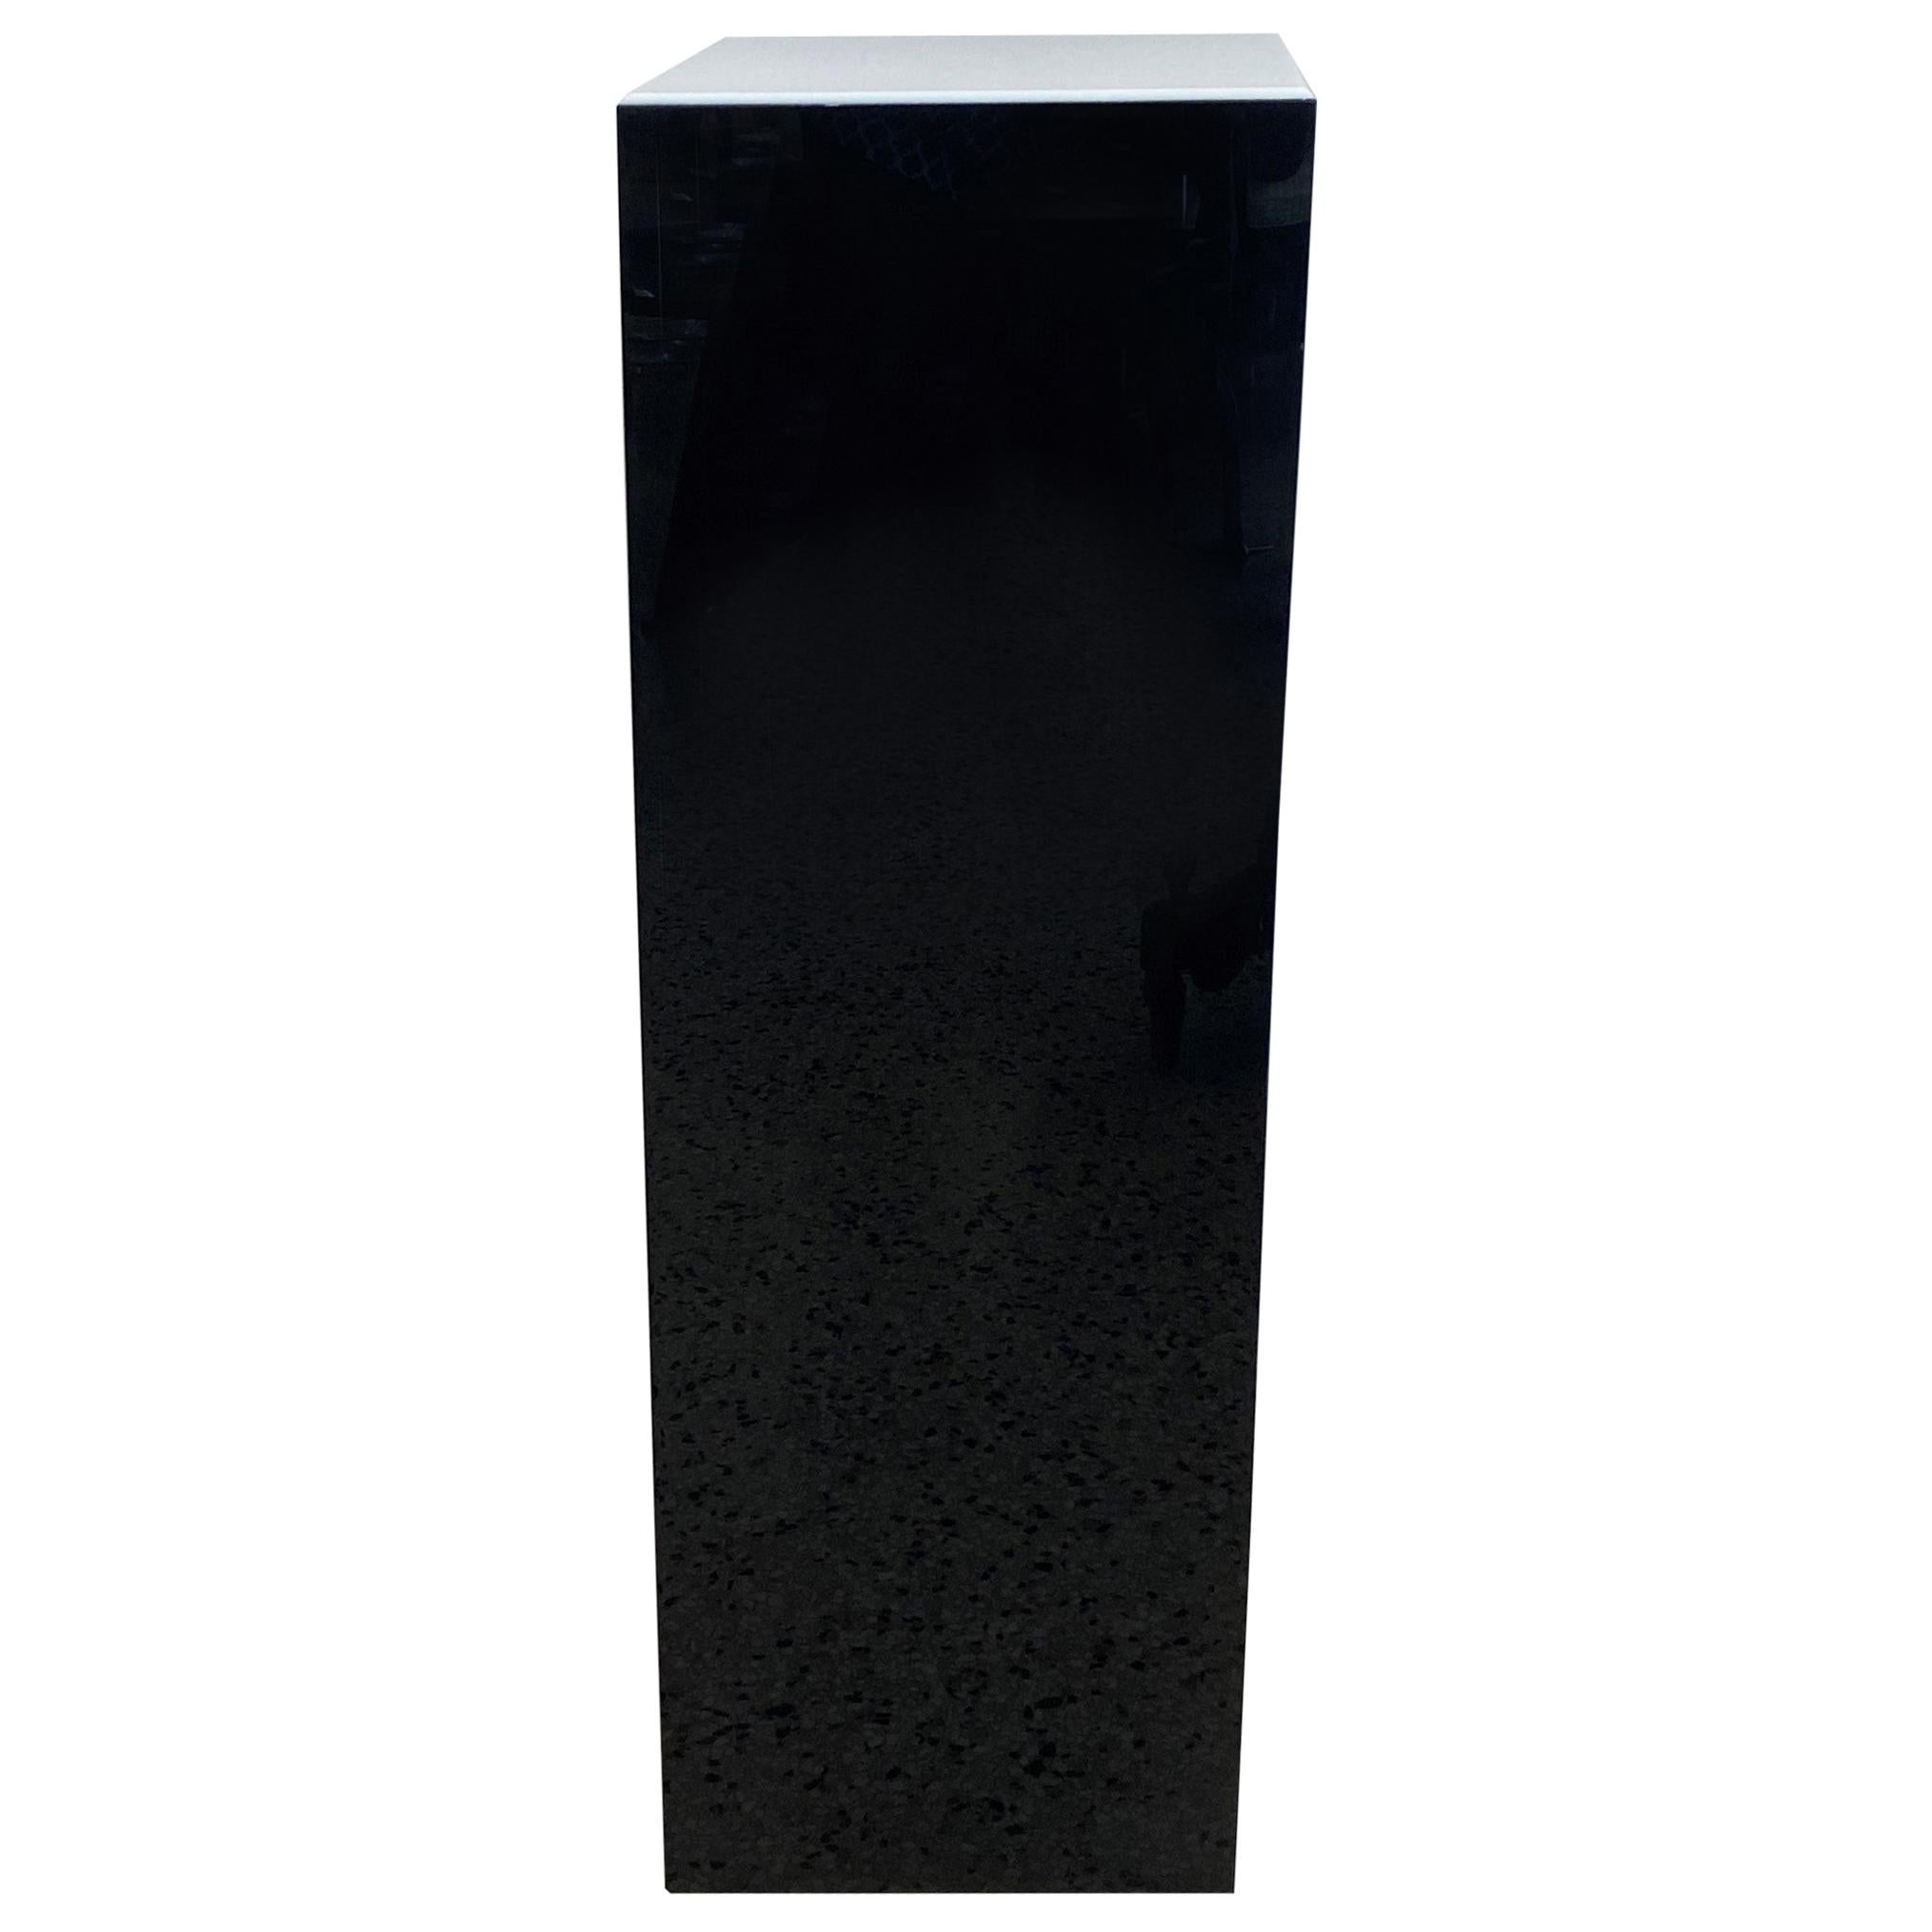 Black and White Lucite Illuminated Pedestal For Sale